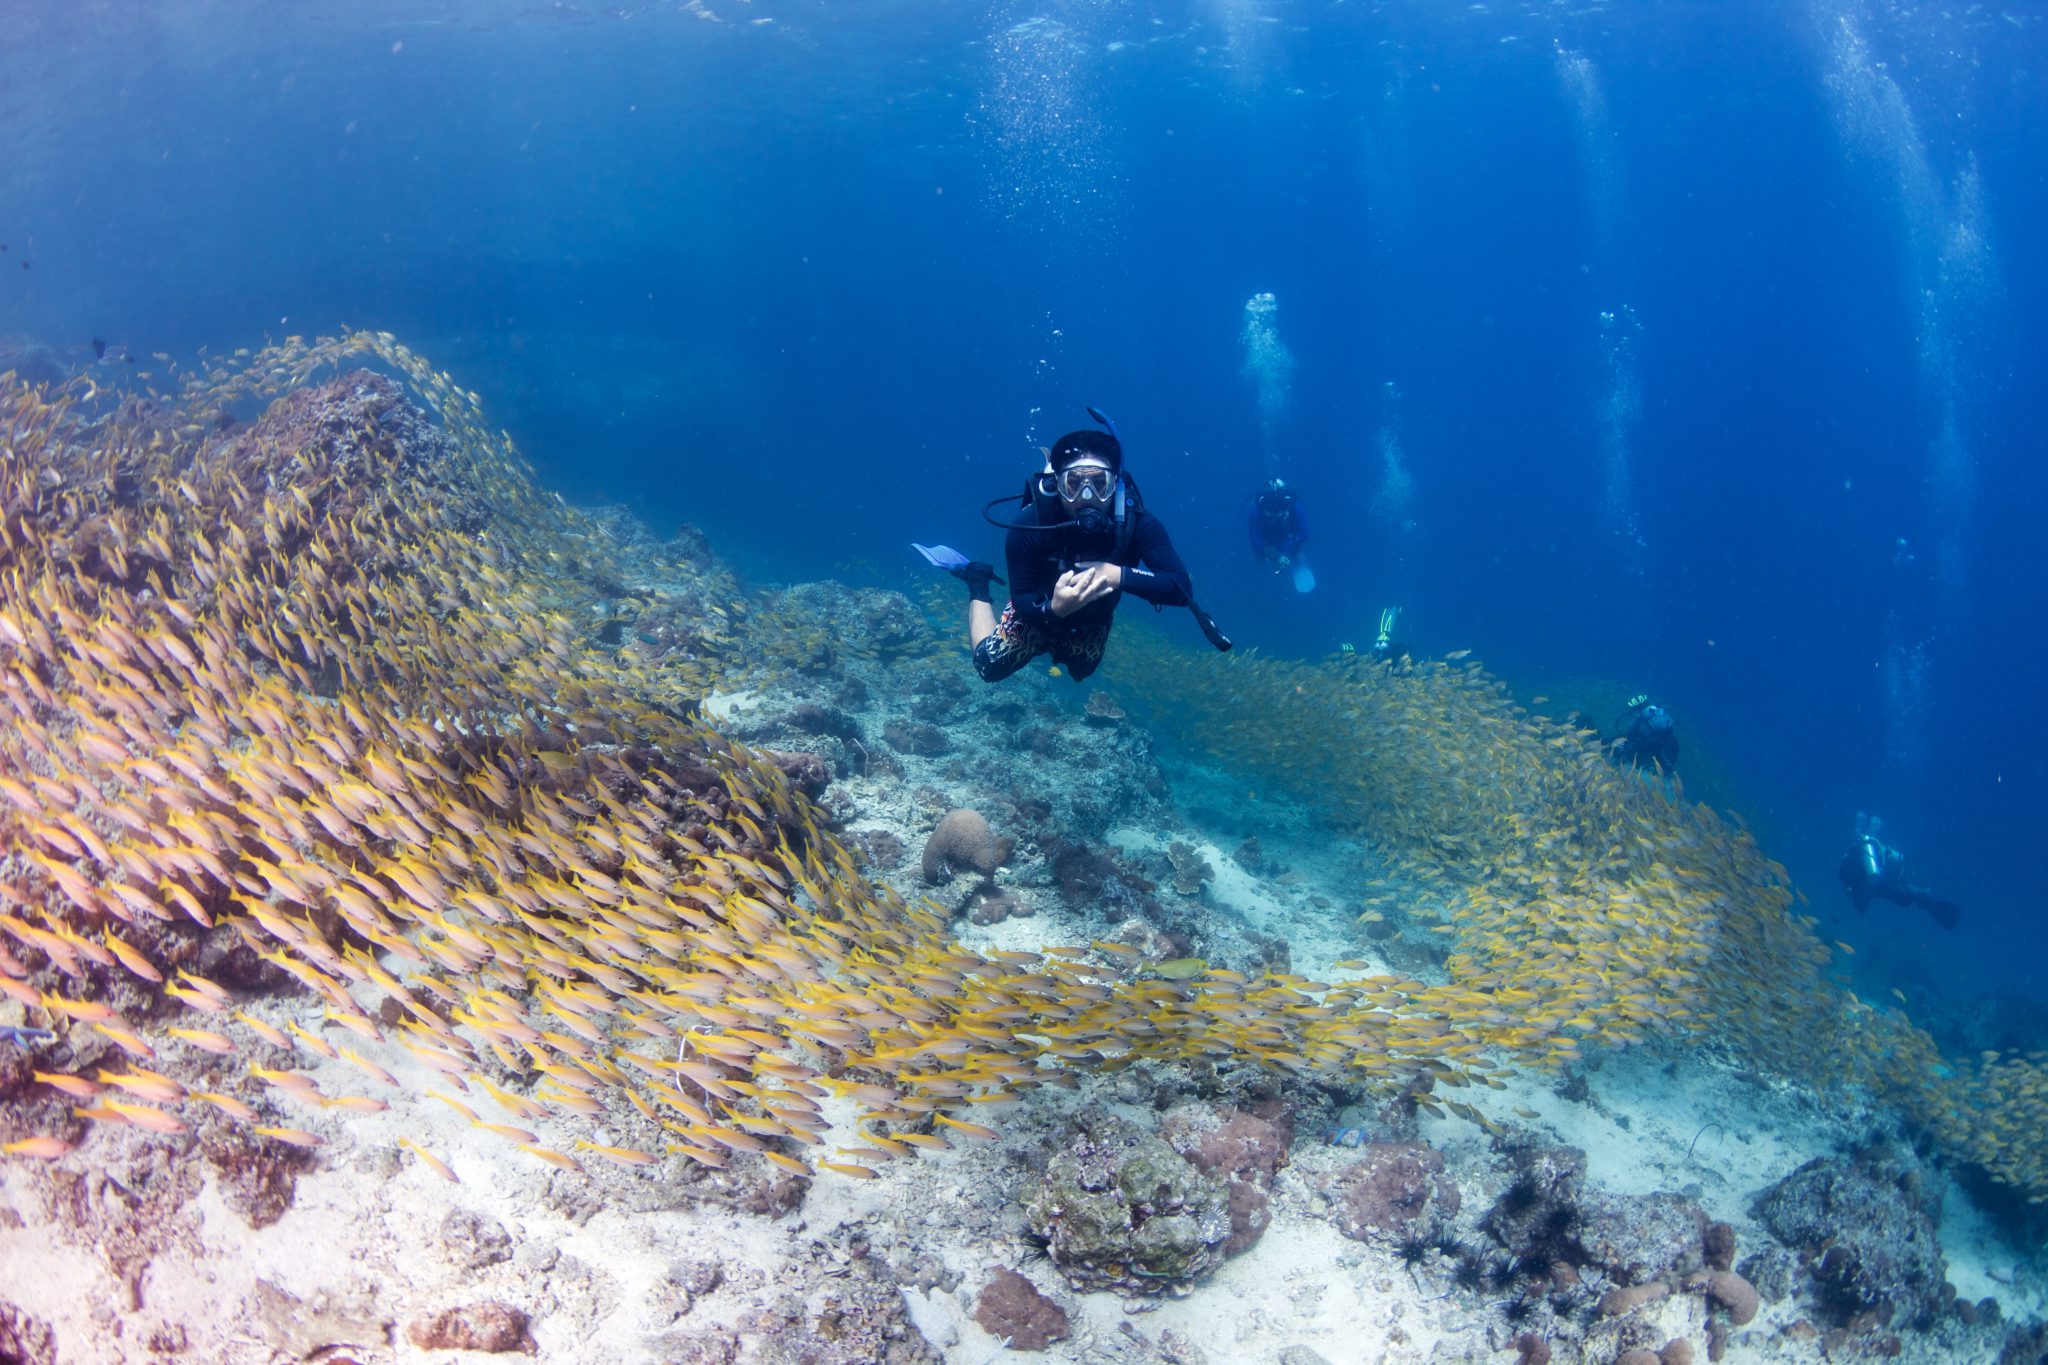 Phi Phi Island - Thailand - Underwater